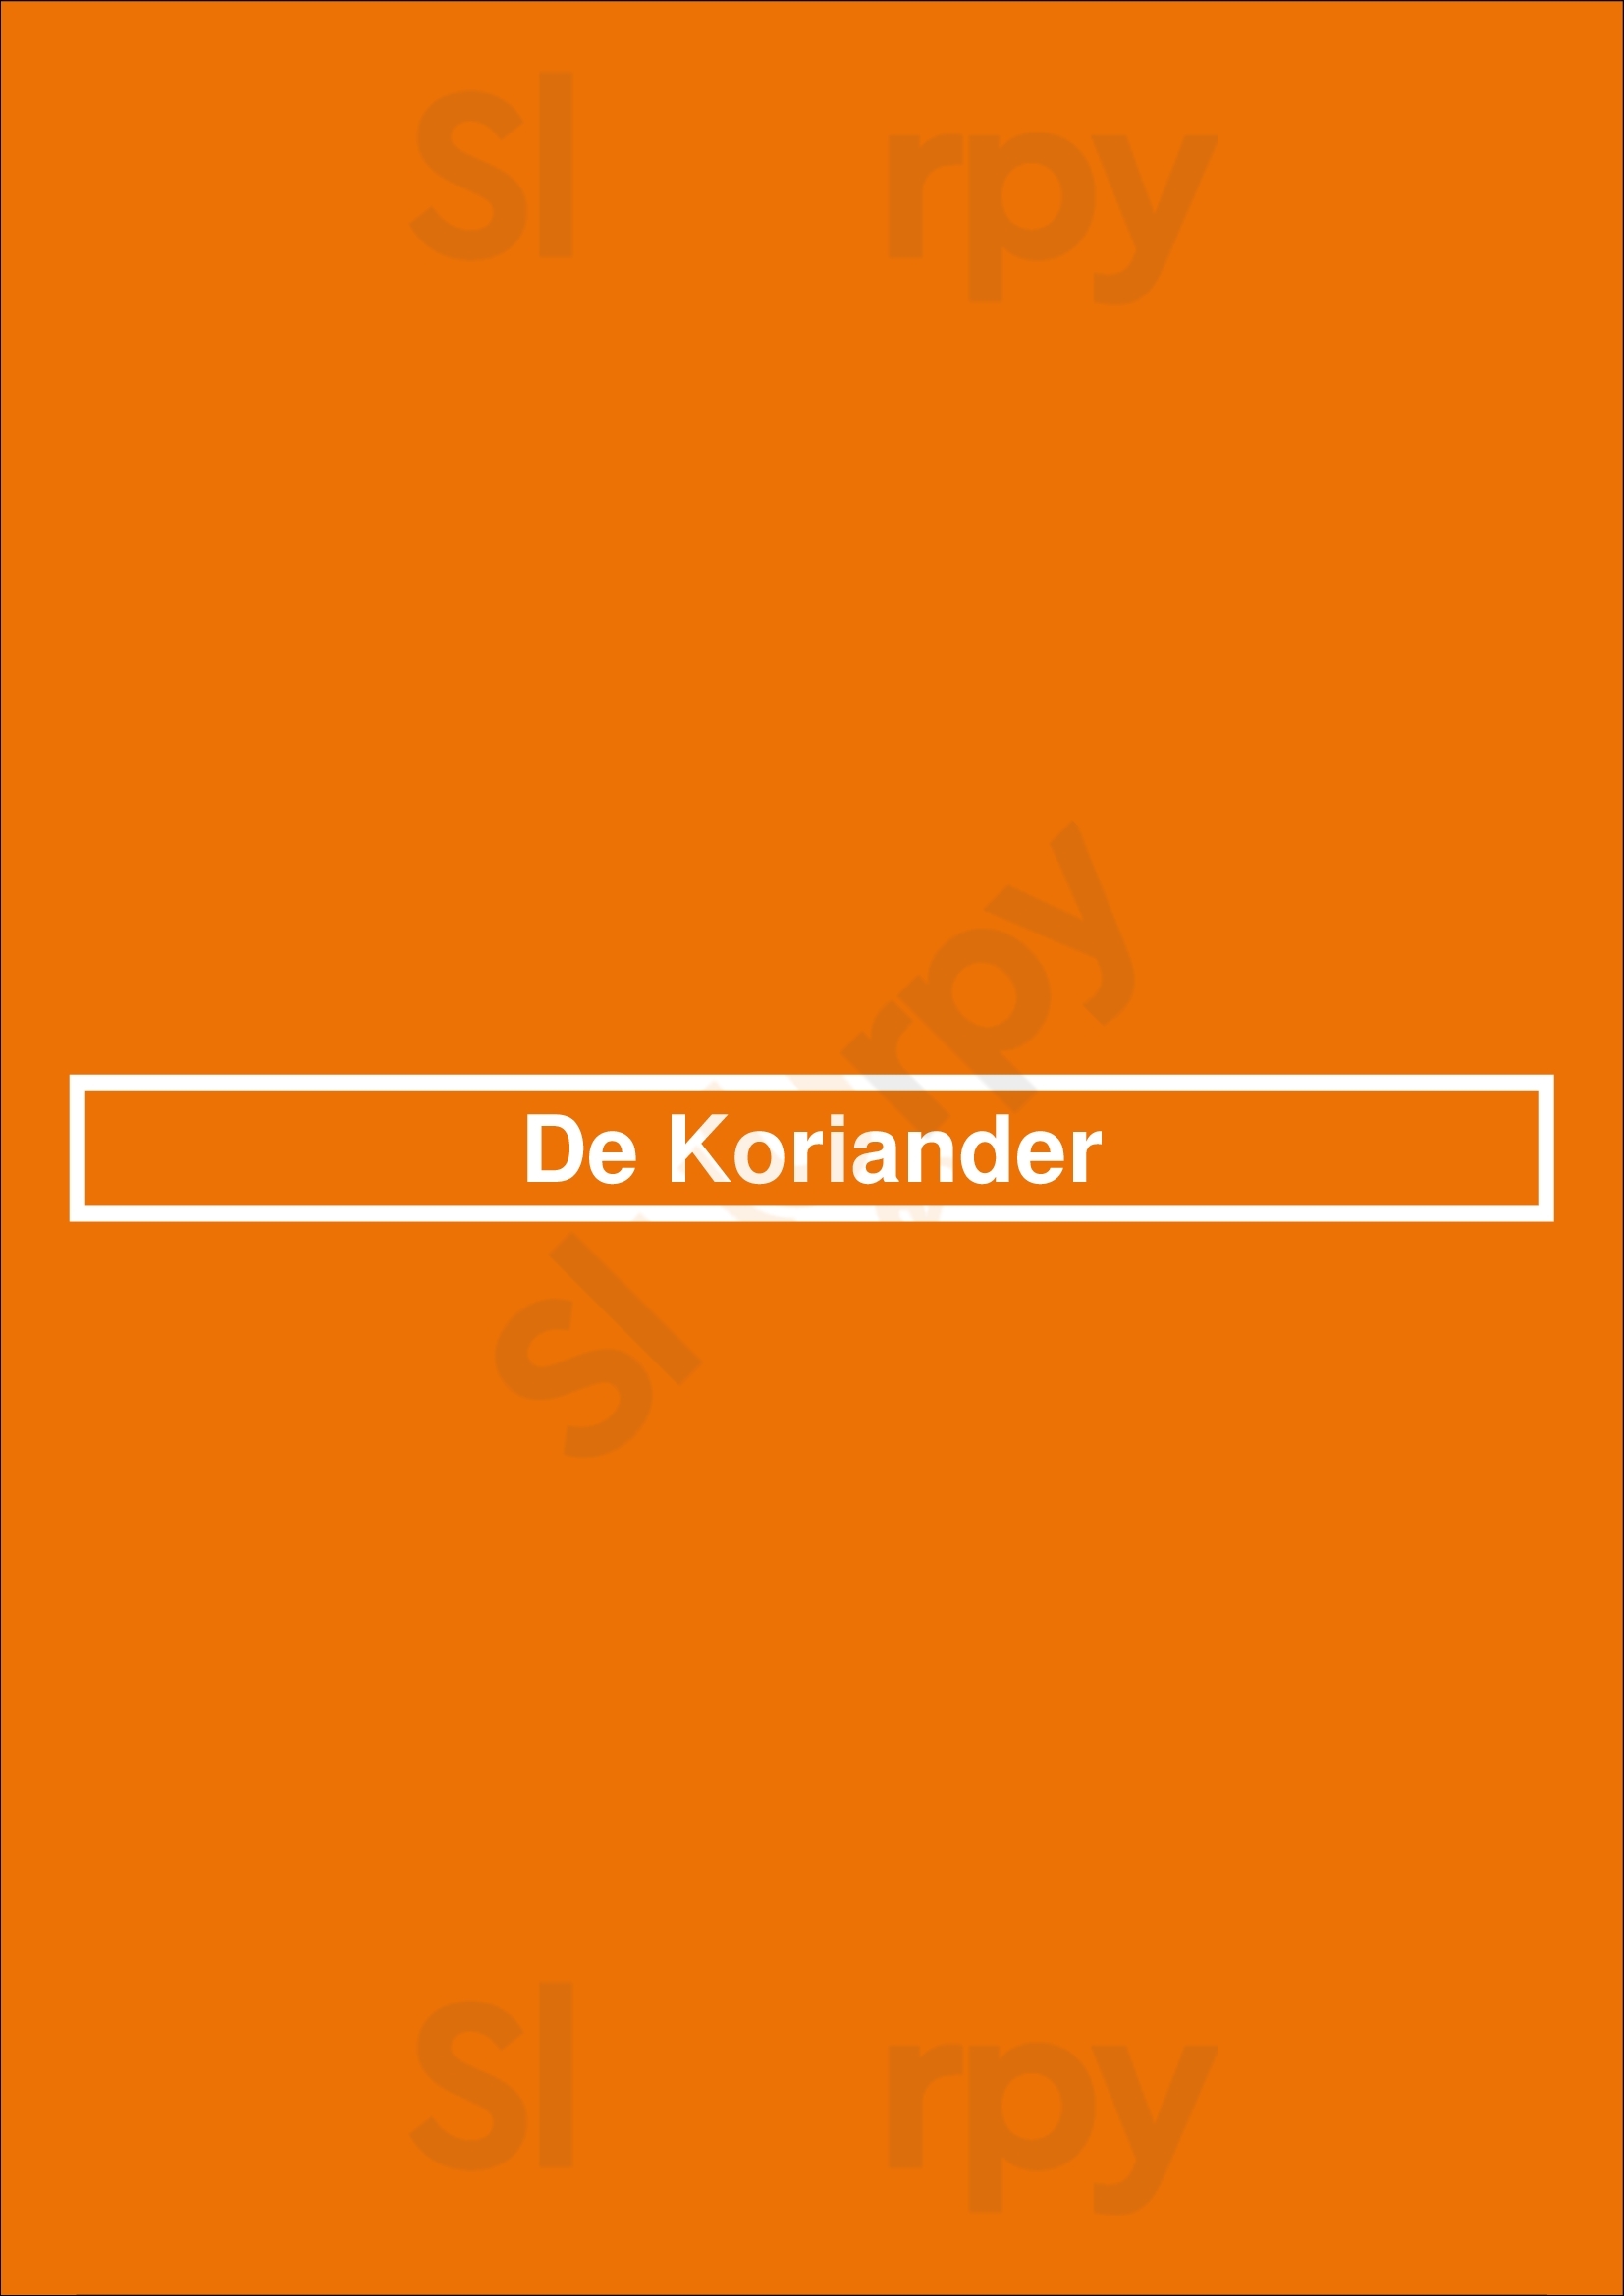 De Koriander Heusden-Zolder Menu - 1